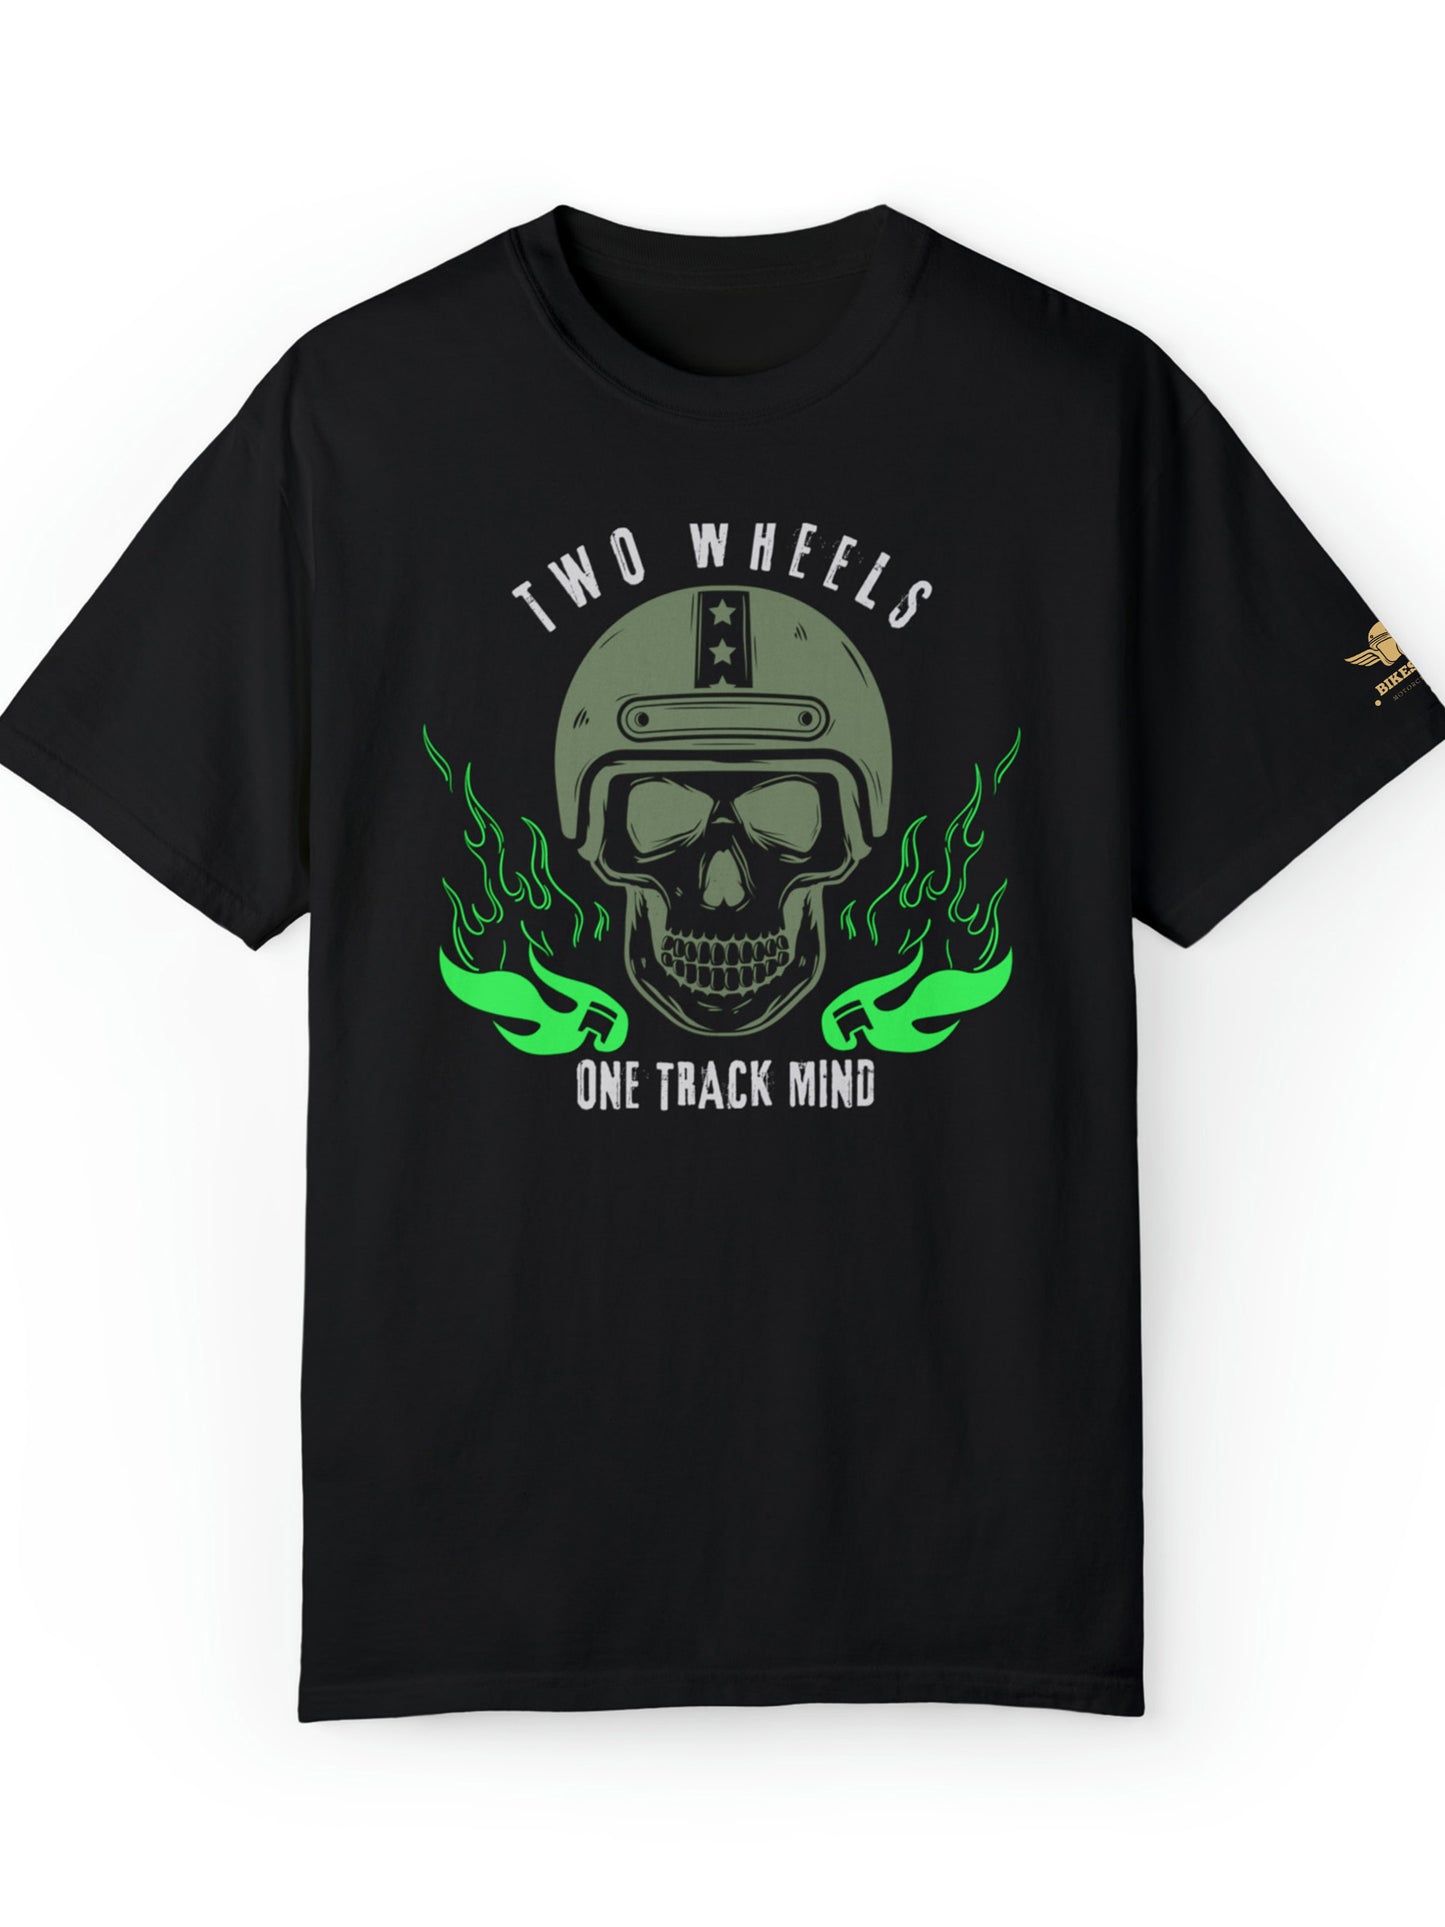 T-shirt motorcycle short sleeve black - Two Wheels